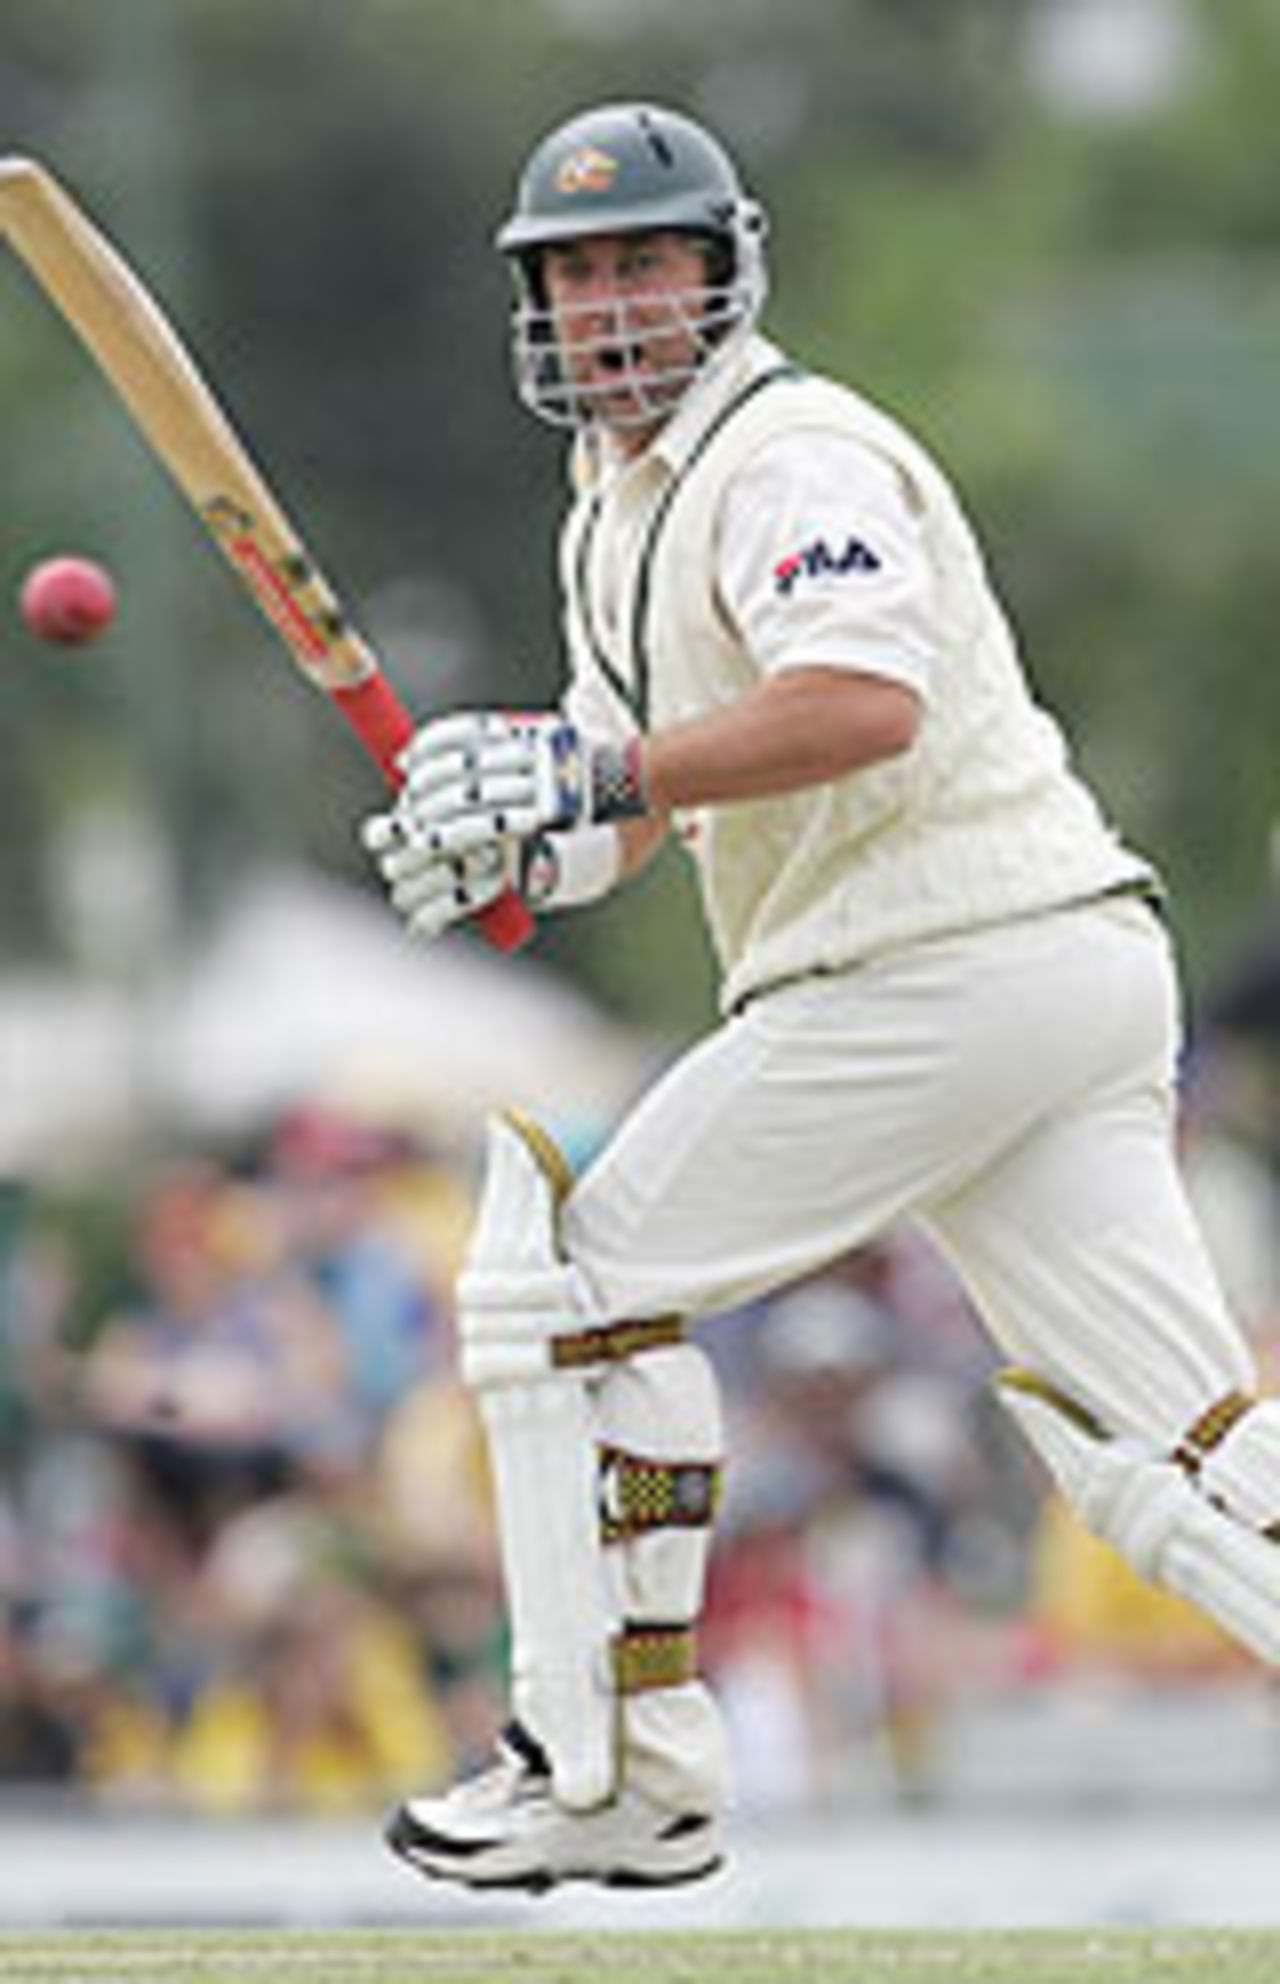 Darren Lehmann on his way to his half-century, Australia v Sri Lanka, 2nd Test, Cairns, 2nd day, July 10, 2004